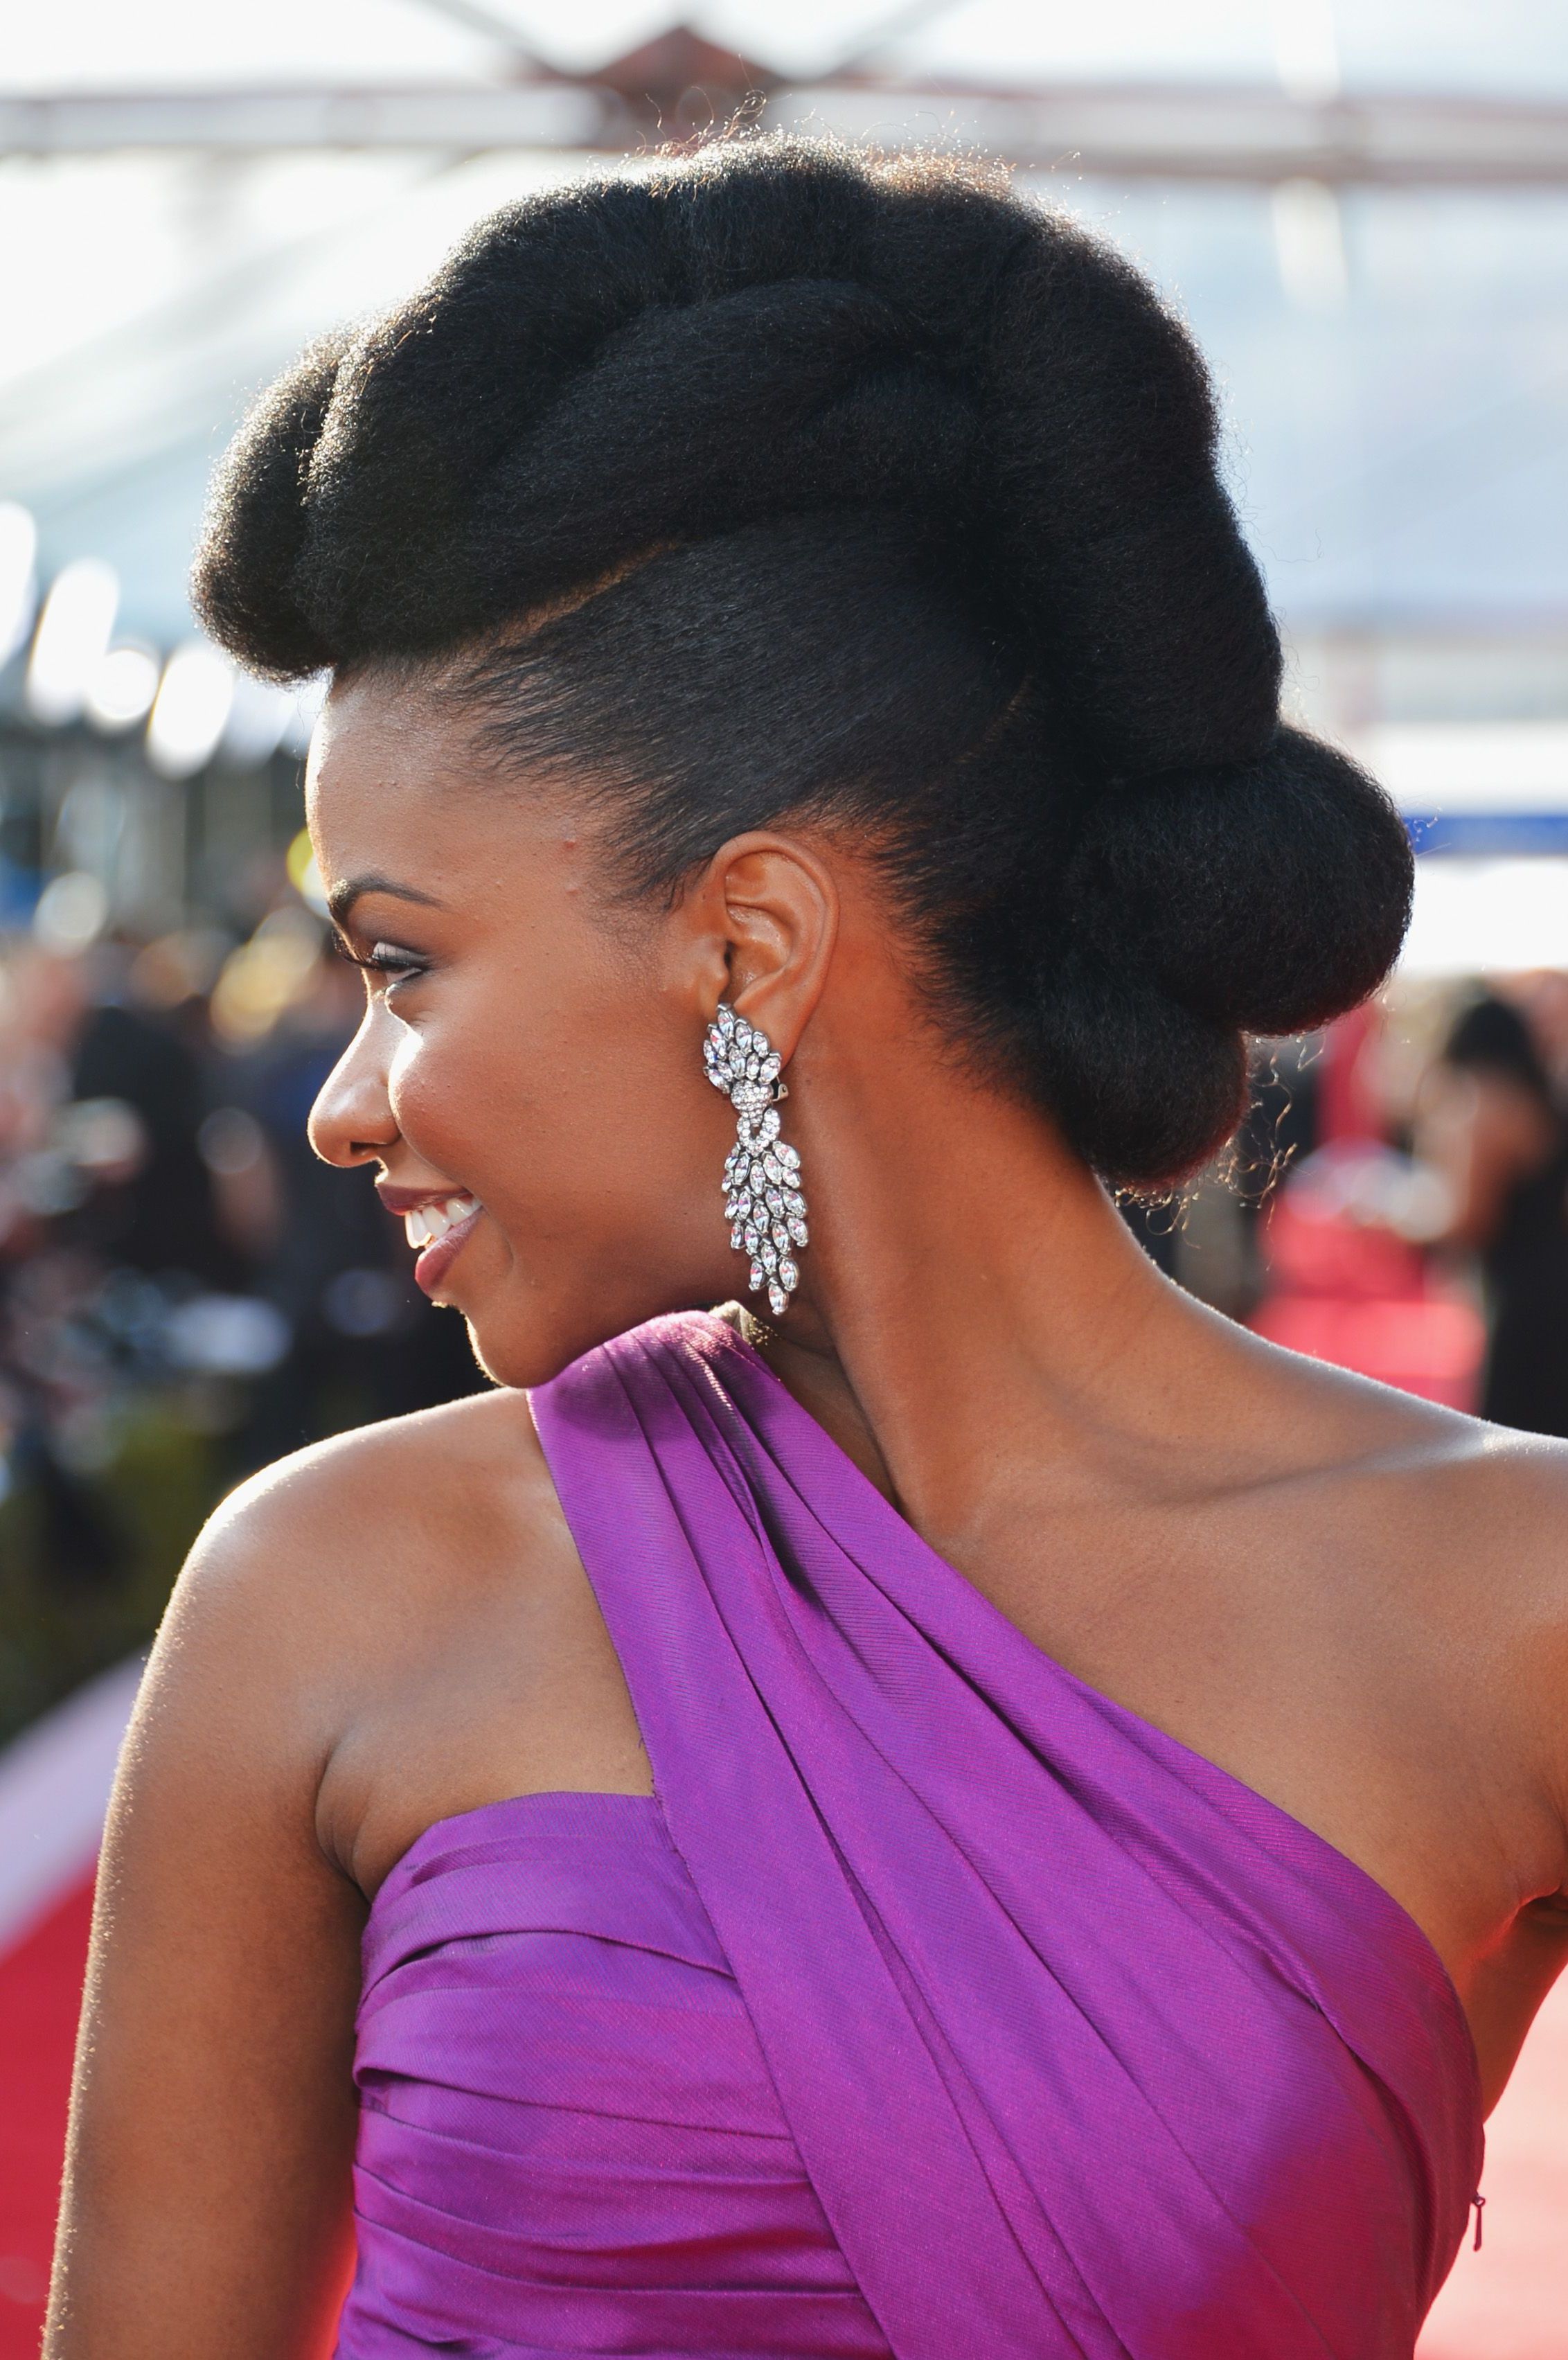 Popular Medium Haircuts For Black Women Natural Hair Regarding 30 Easy Natural Hairstyles For Black Women – Short, Medium & Long (View 19 of 20)